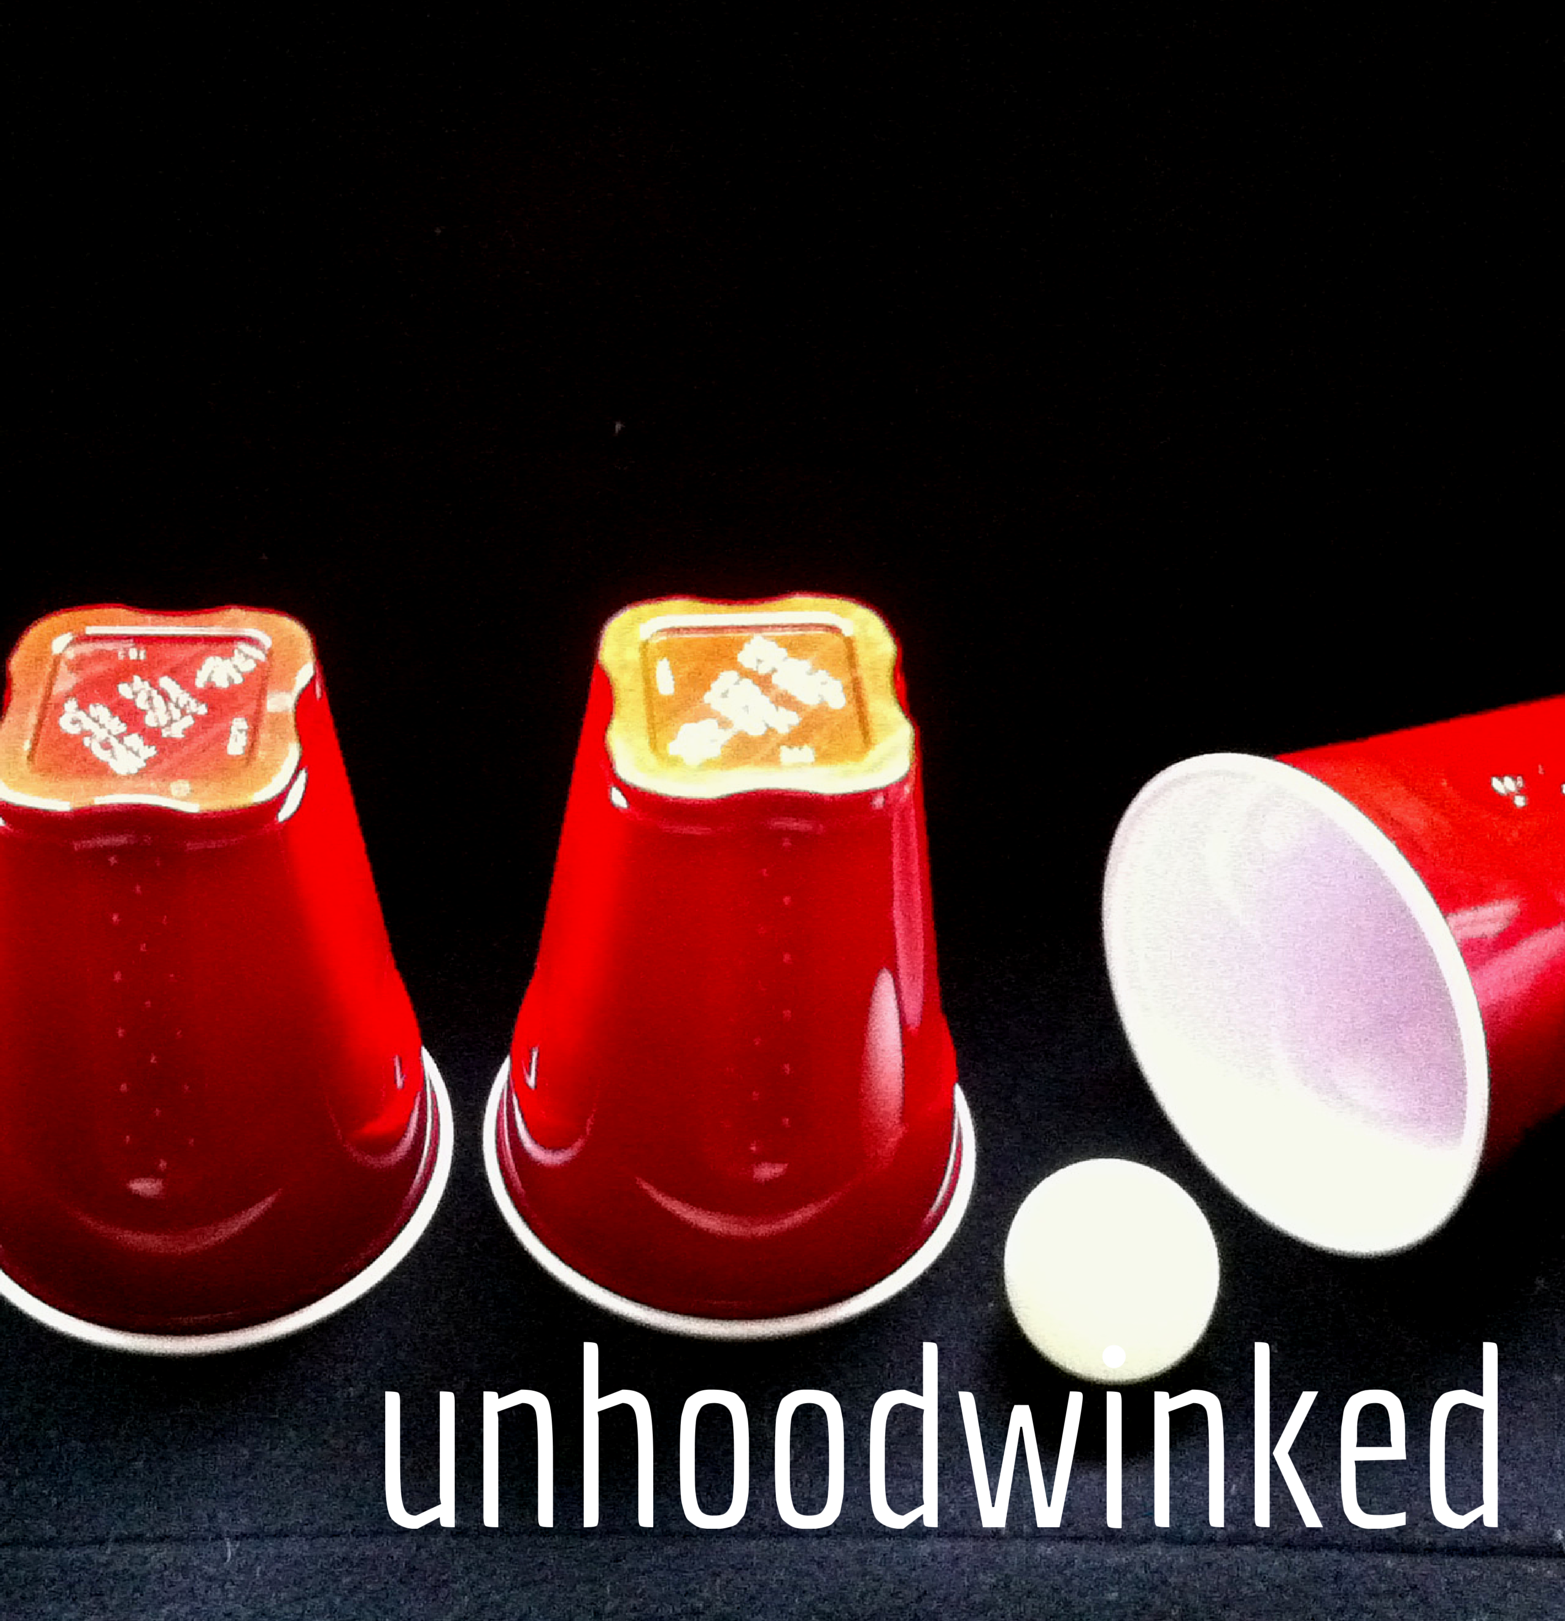 The unhoodwinked logo